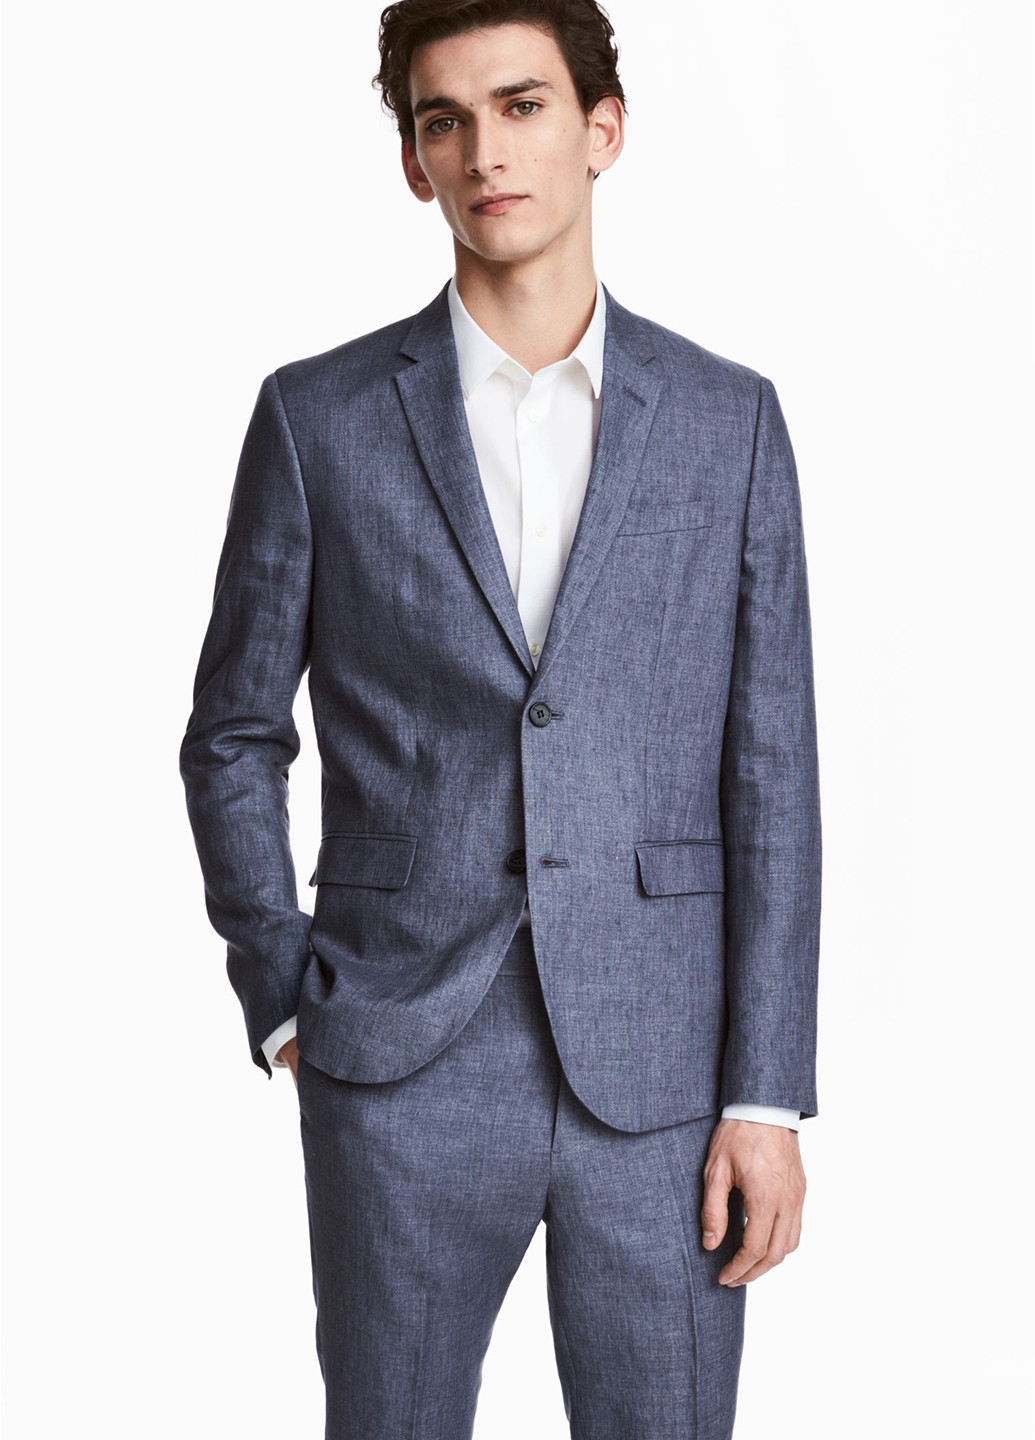 Пиджак H&M однобортный меланж тёмно-синий кэжуал лен